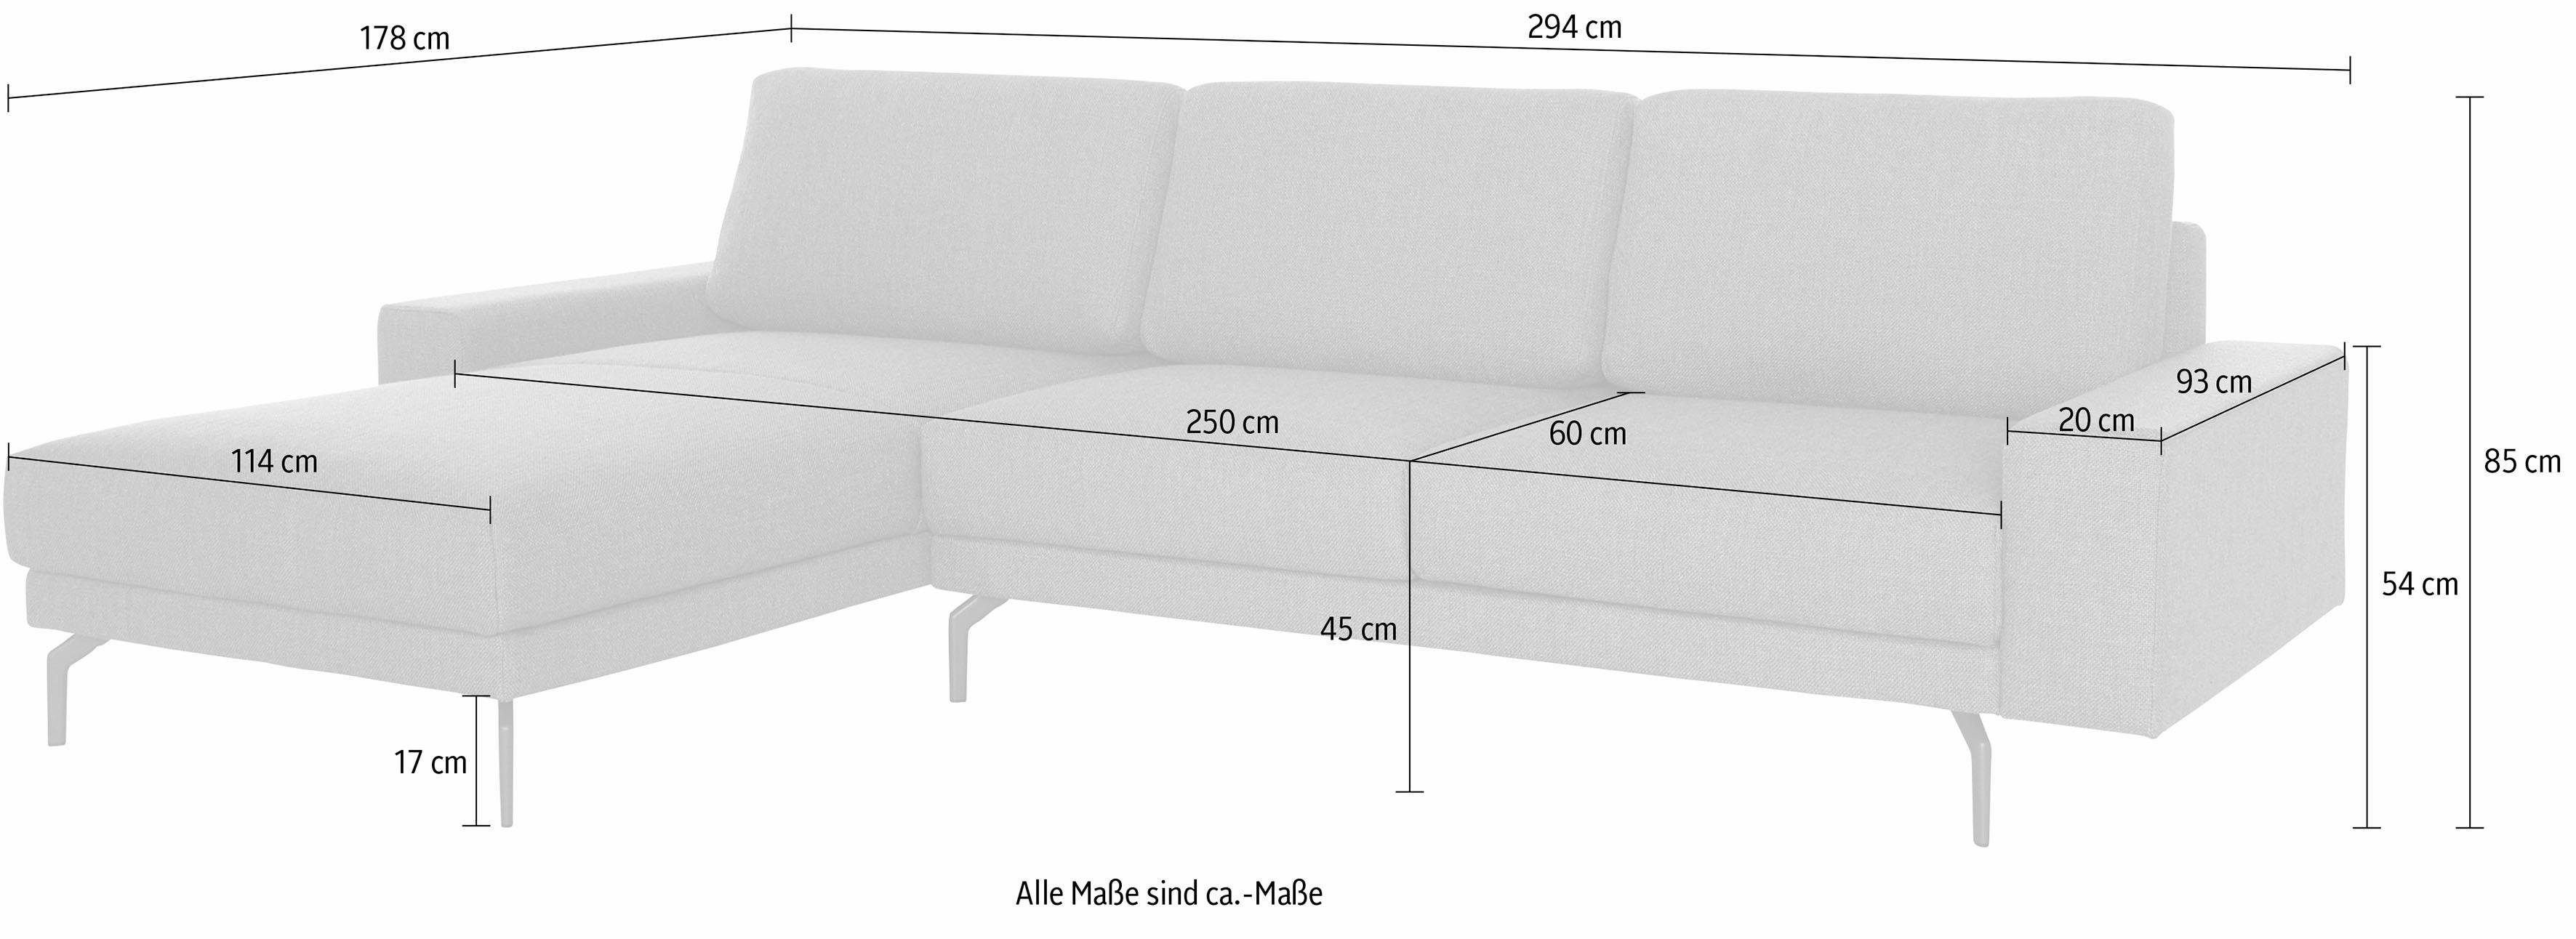 Armlehne 294 und in cm Breite sofa niedrig, umbragrau, breit Ecksofa hülsta Alugussfüße hs.450,